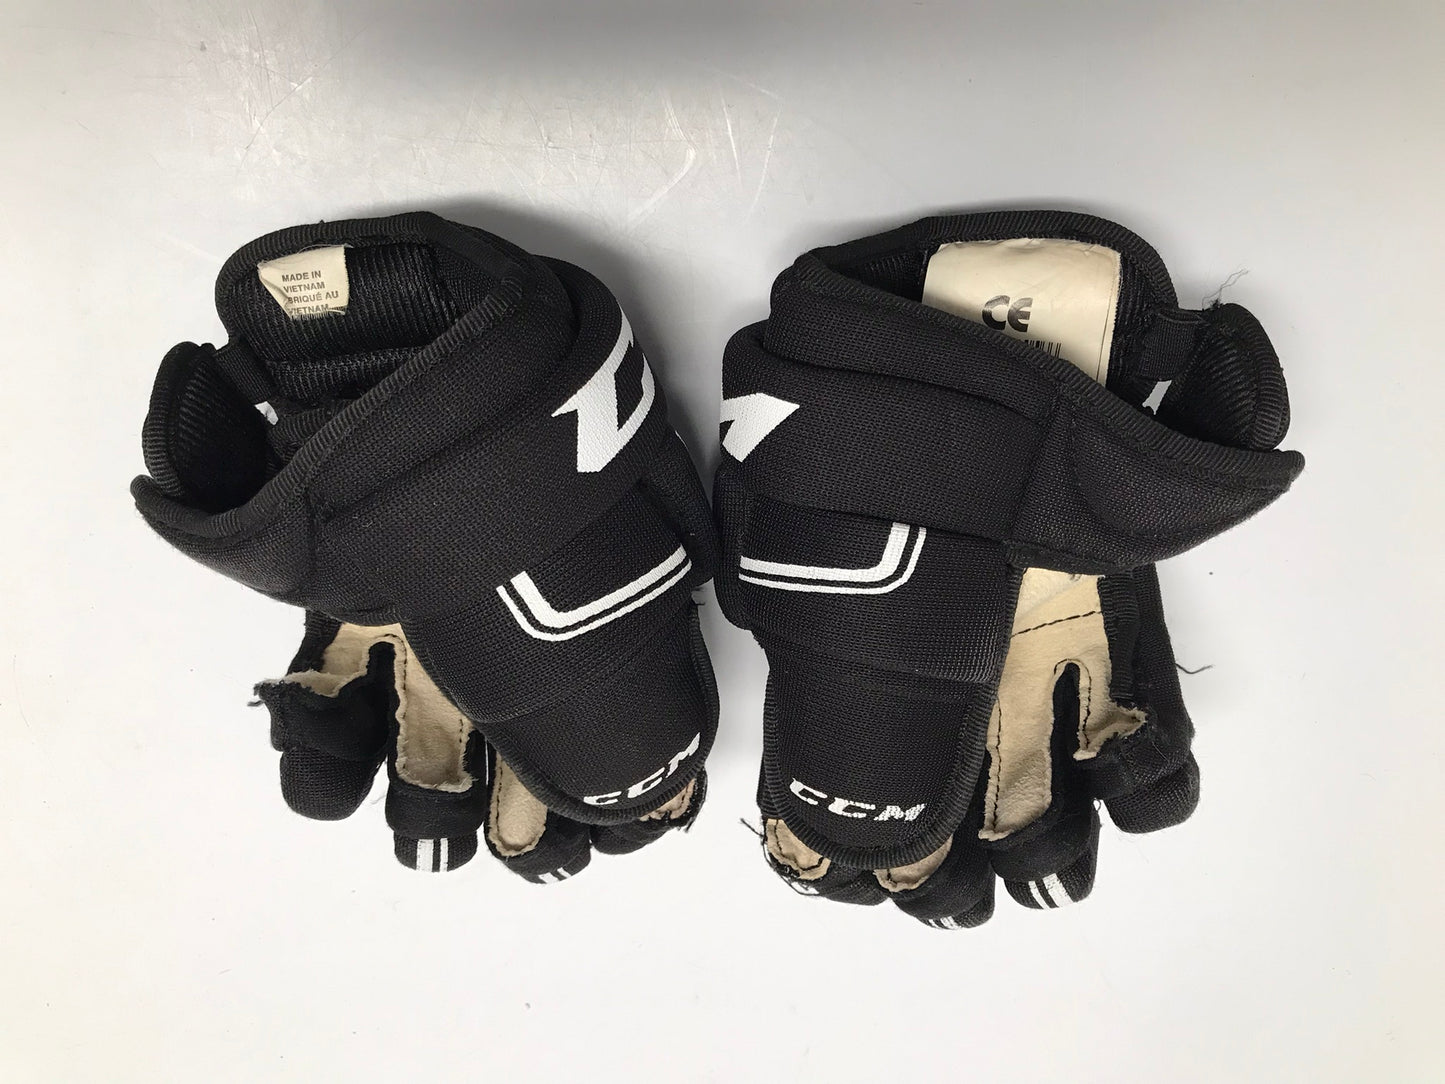 Hockey Gloves Child Size 8 inch Age 3-5 CCM Black White As New